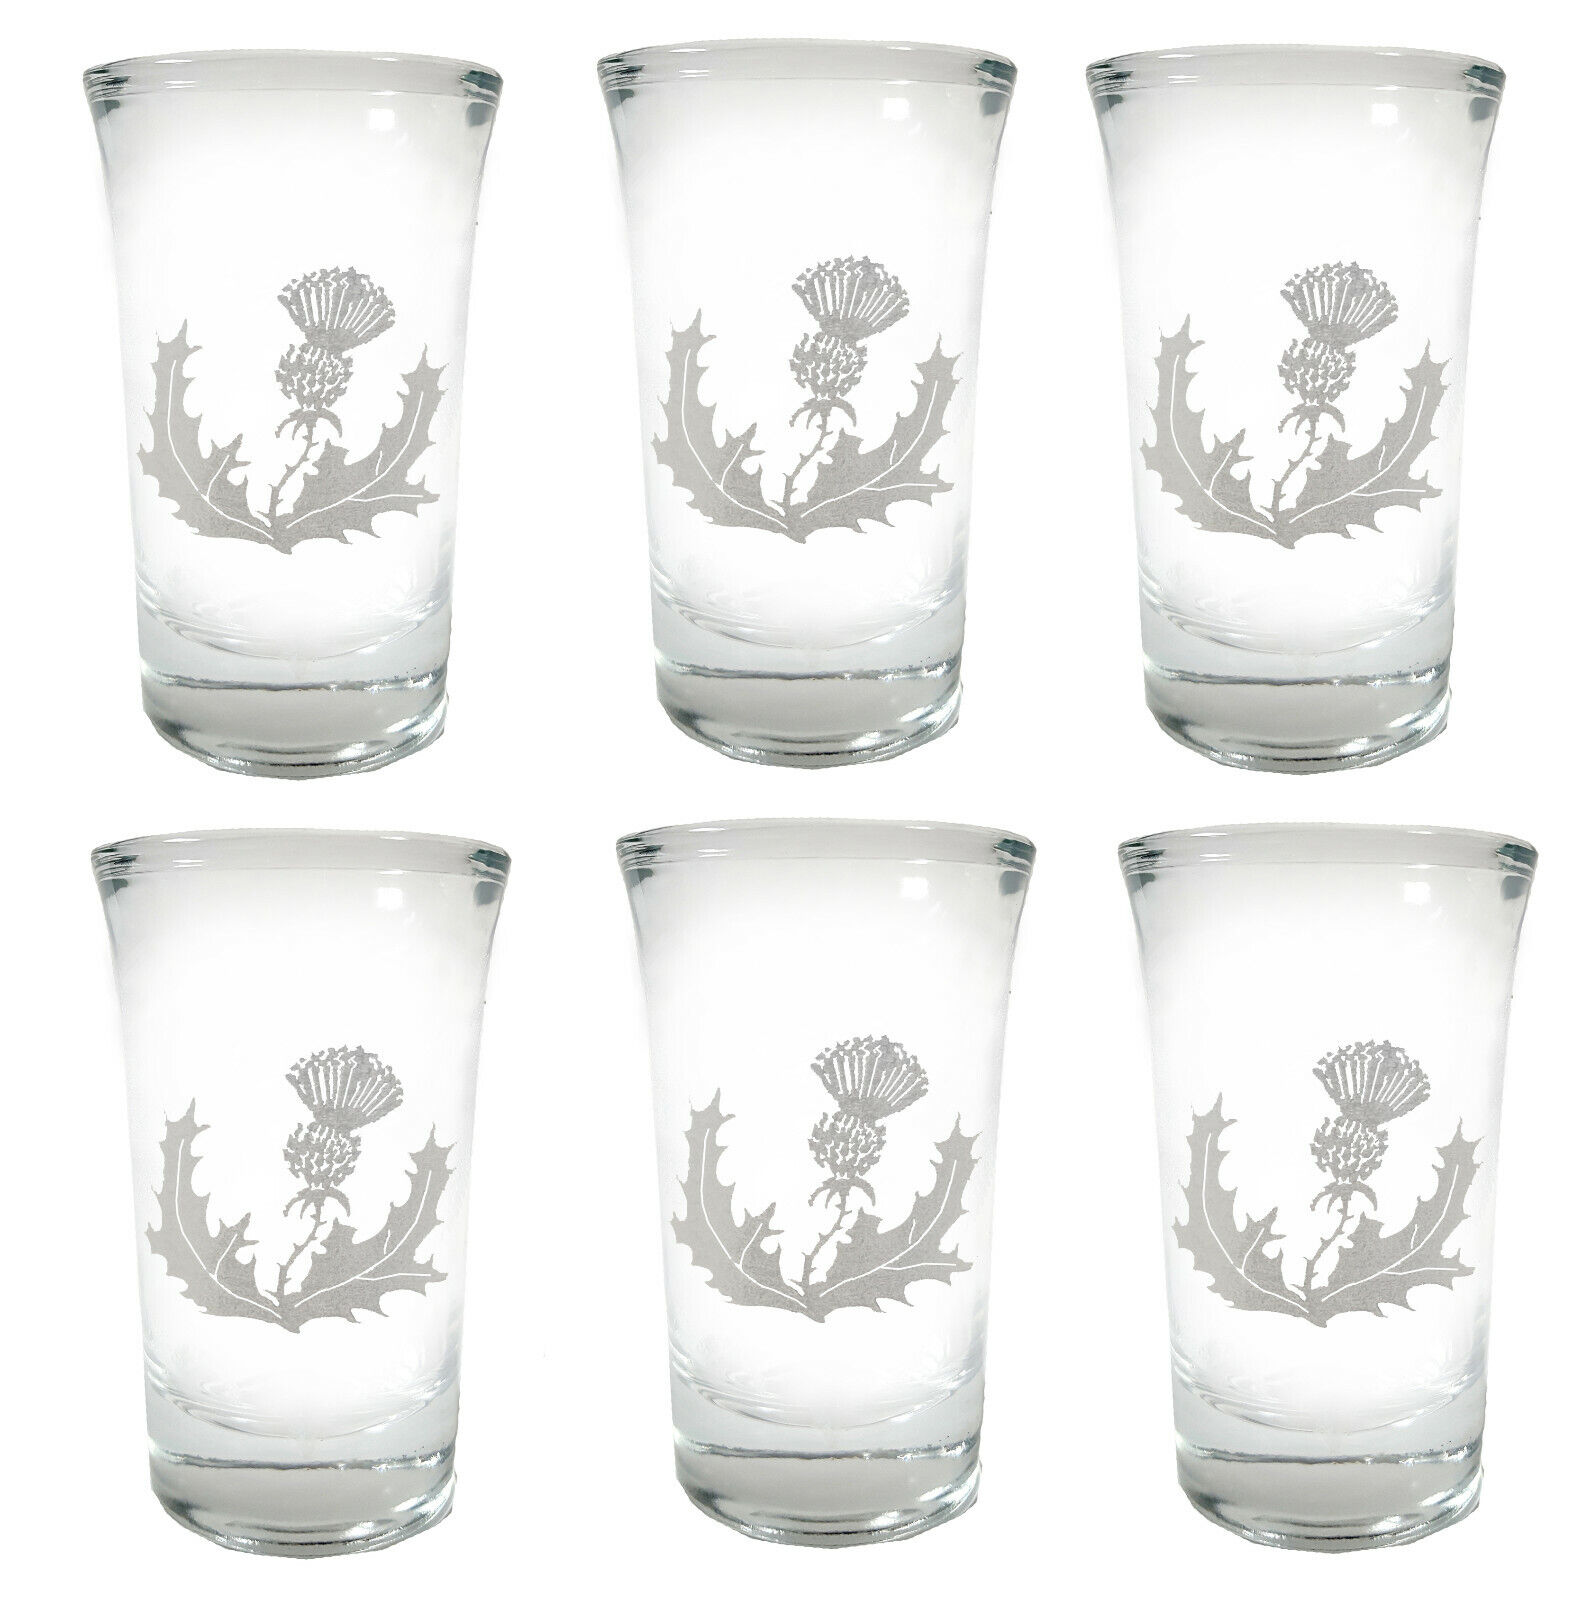 Scottish Thistle Shot Glass Set of 6 - Free Personalized Engraving, 1.5 oz